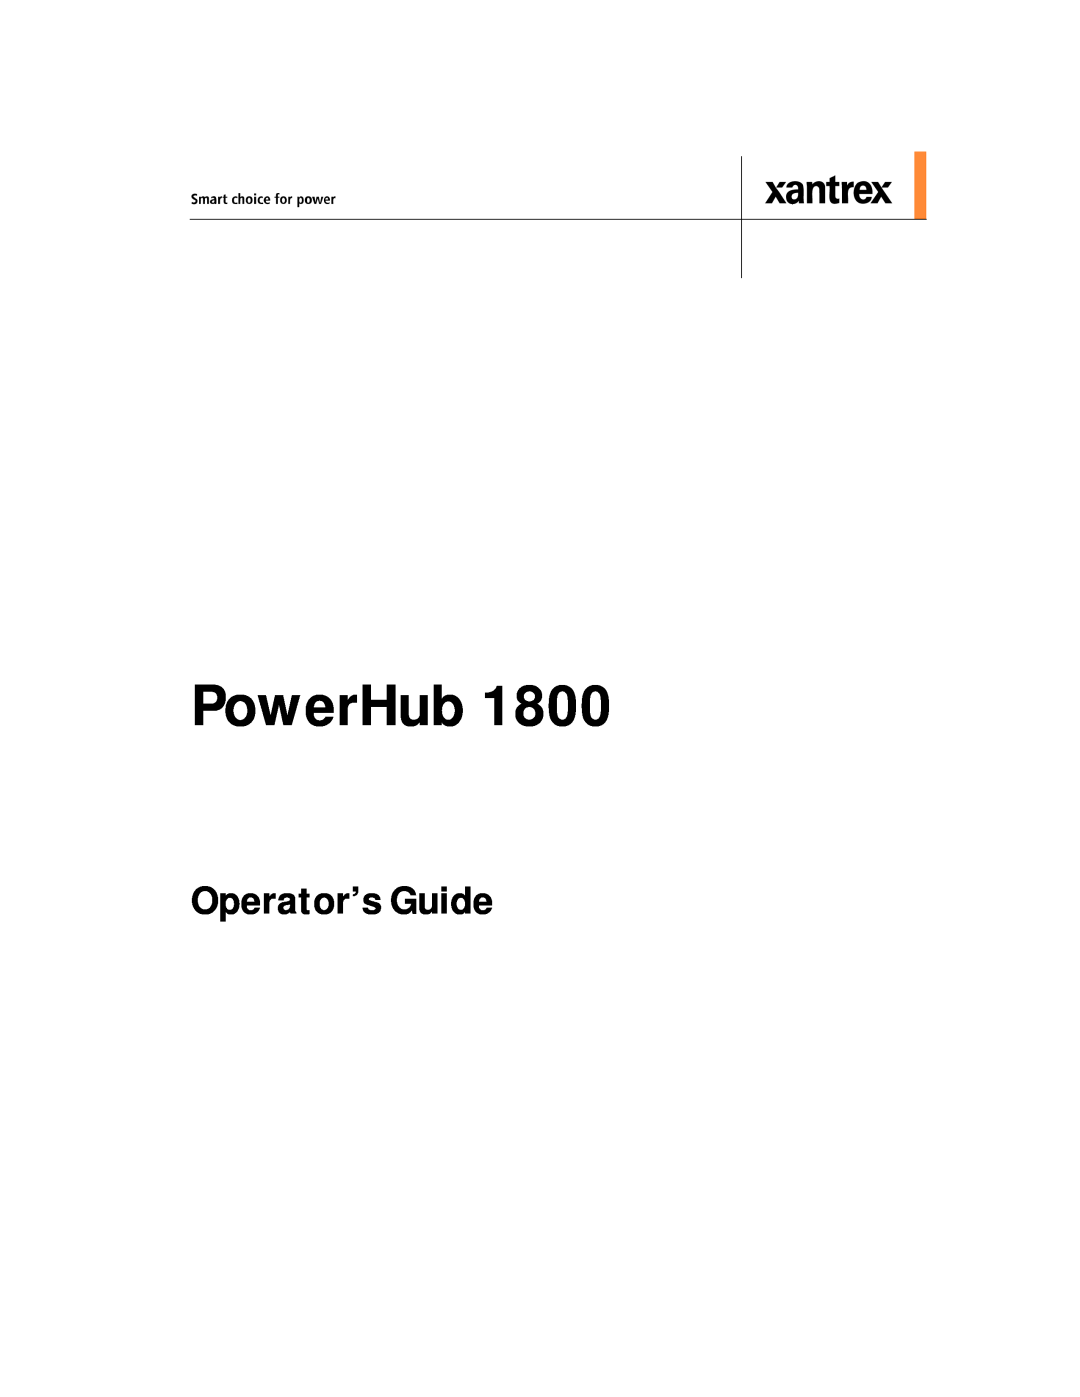 Xantrex Technology PH1800 manual Operator’s Guide, PowerHub 